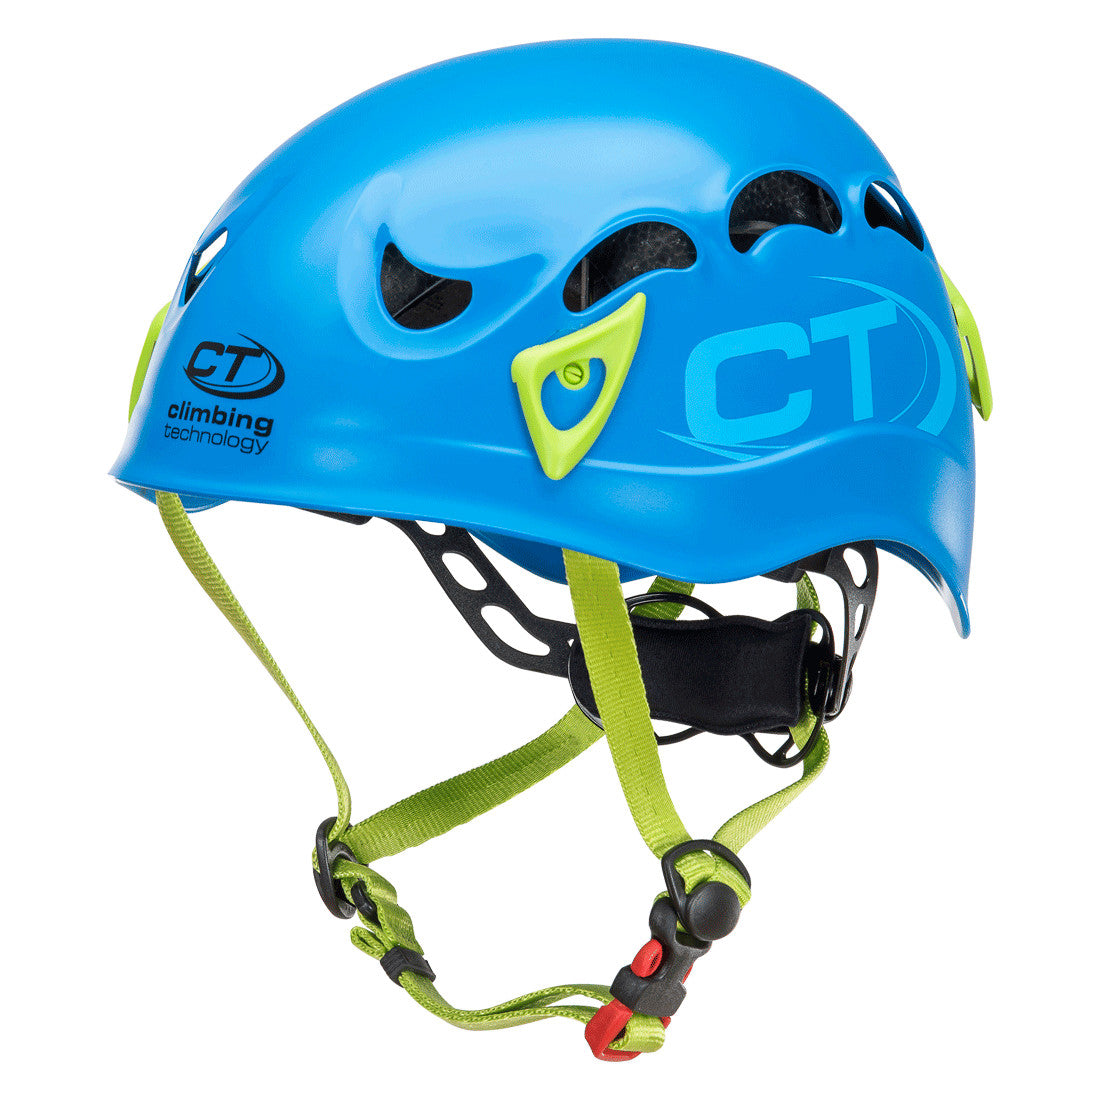 Climbing Technology Galaxy climbing helmet, in green and blue colours